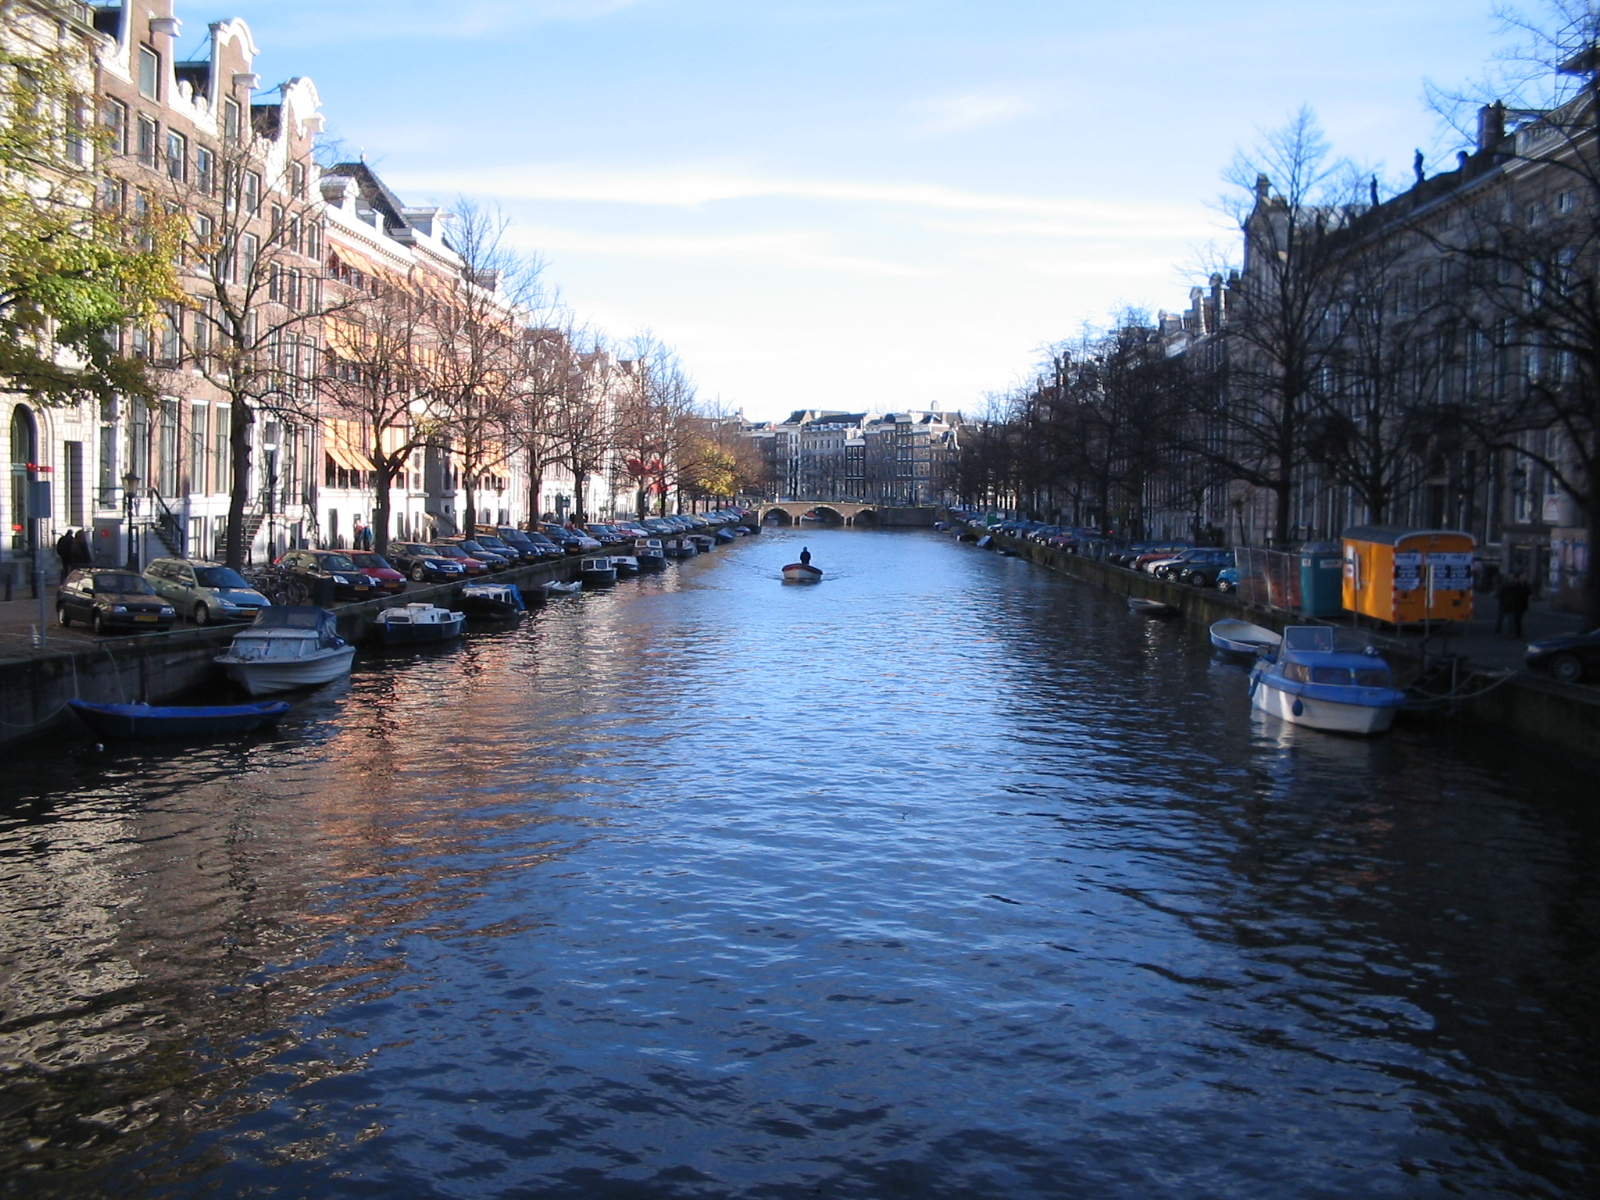 water runs through every part of Amsterdam